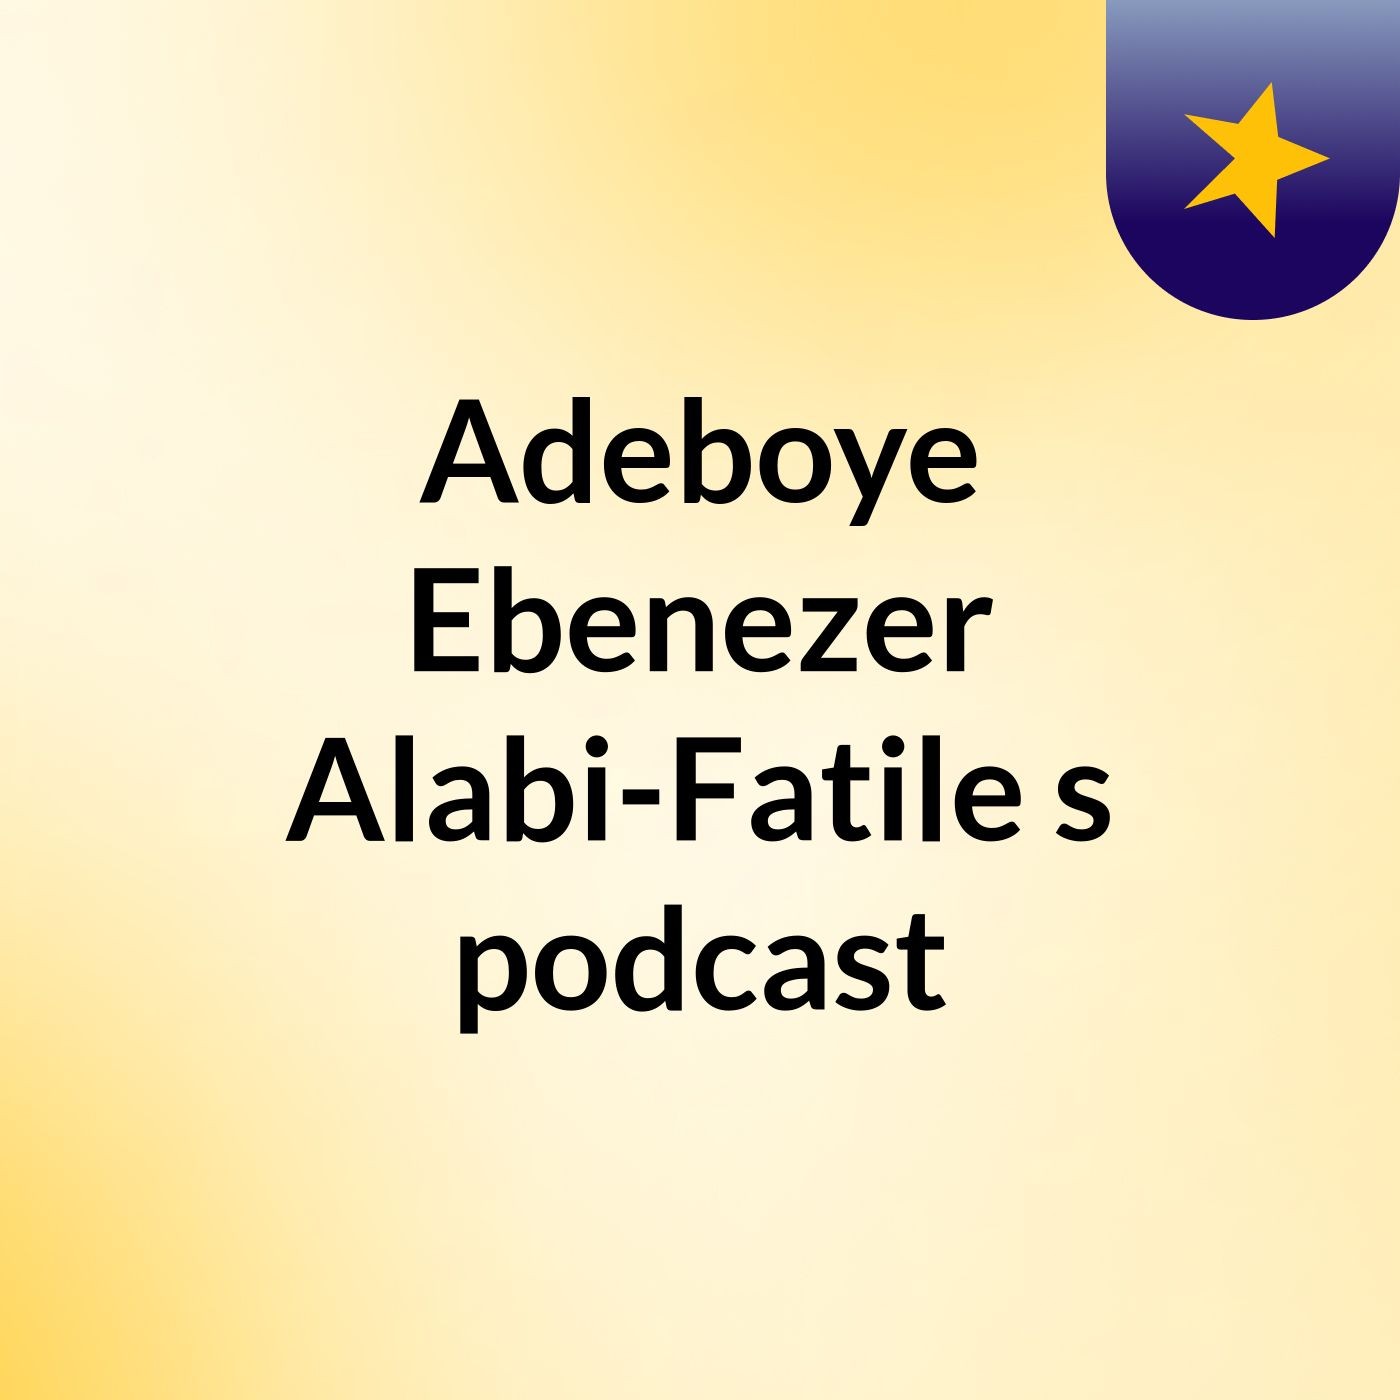 Episode 3 - Confidence by Adeboye Ebenezer Alabi-Fatile